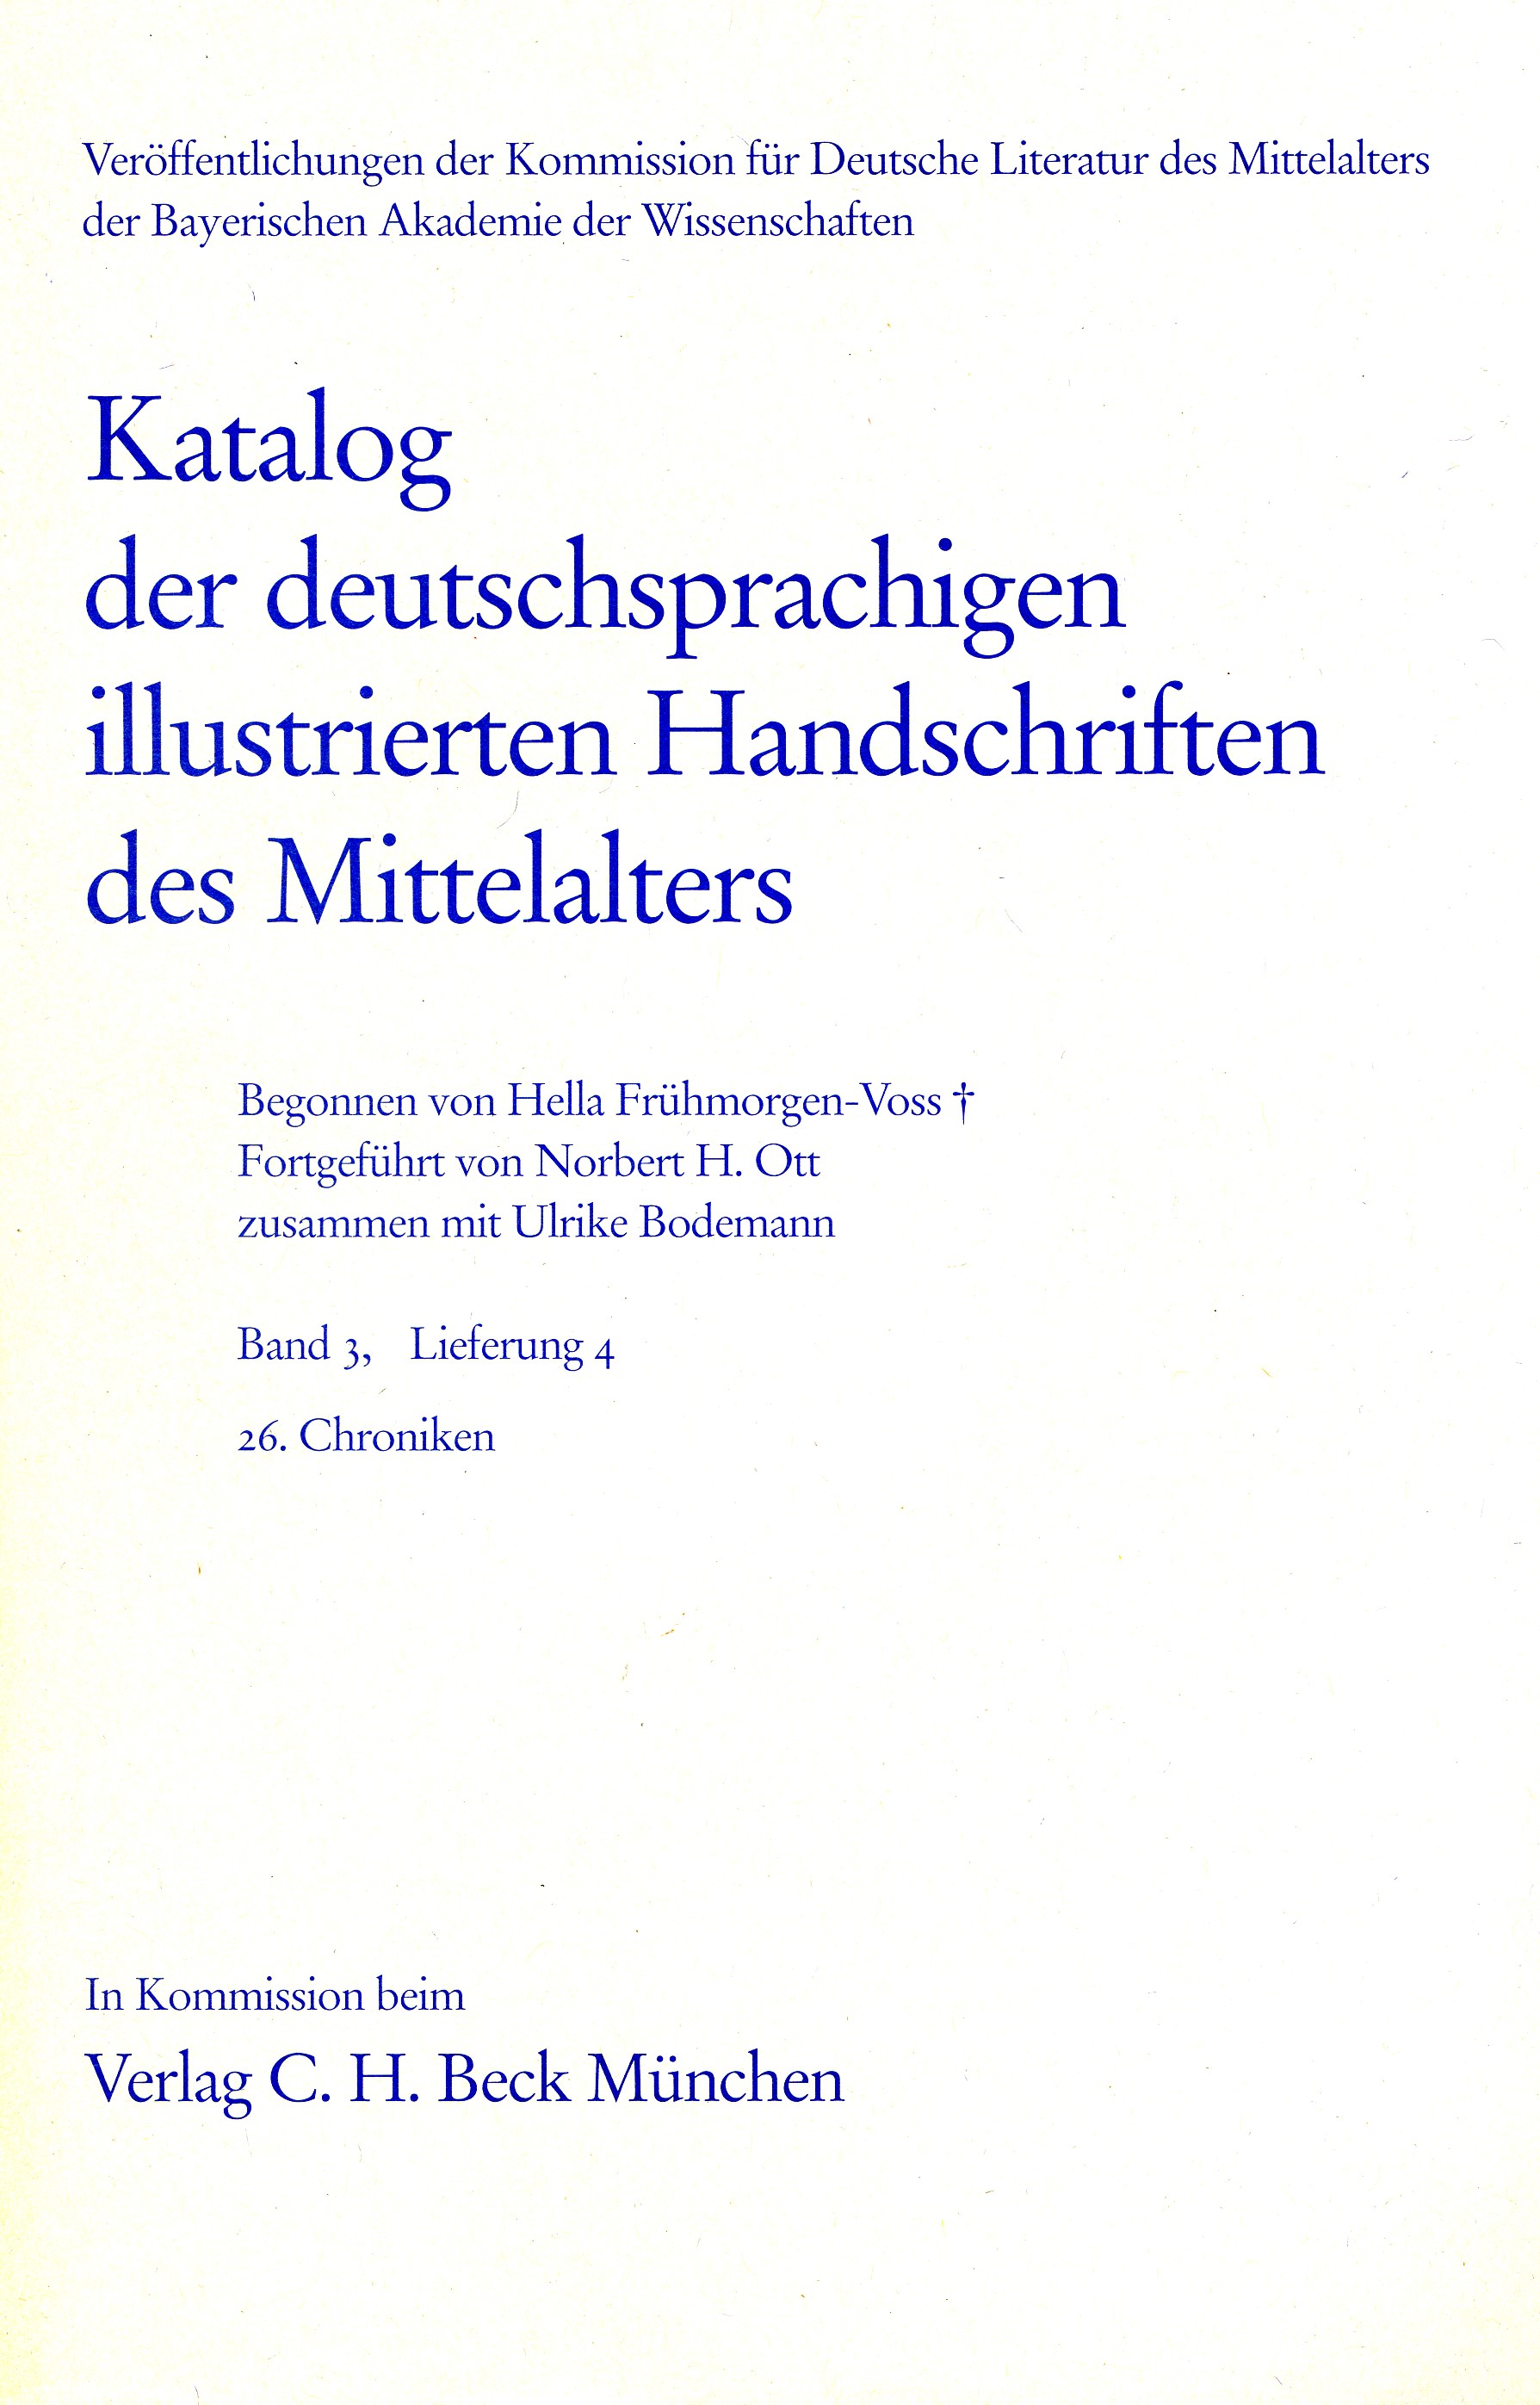 Cover: Bodemann, Ulrike /  Frühmorgen-Voss, Hella / Ott, Norbert H.
, Katalog der deutschsprachigen illustrierten Handschriften des Mittelalters Band 3, Lieferung 4